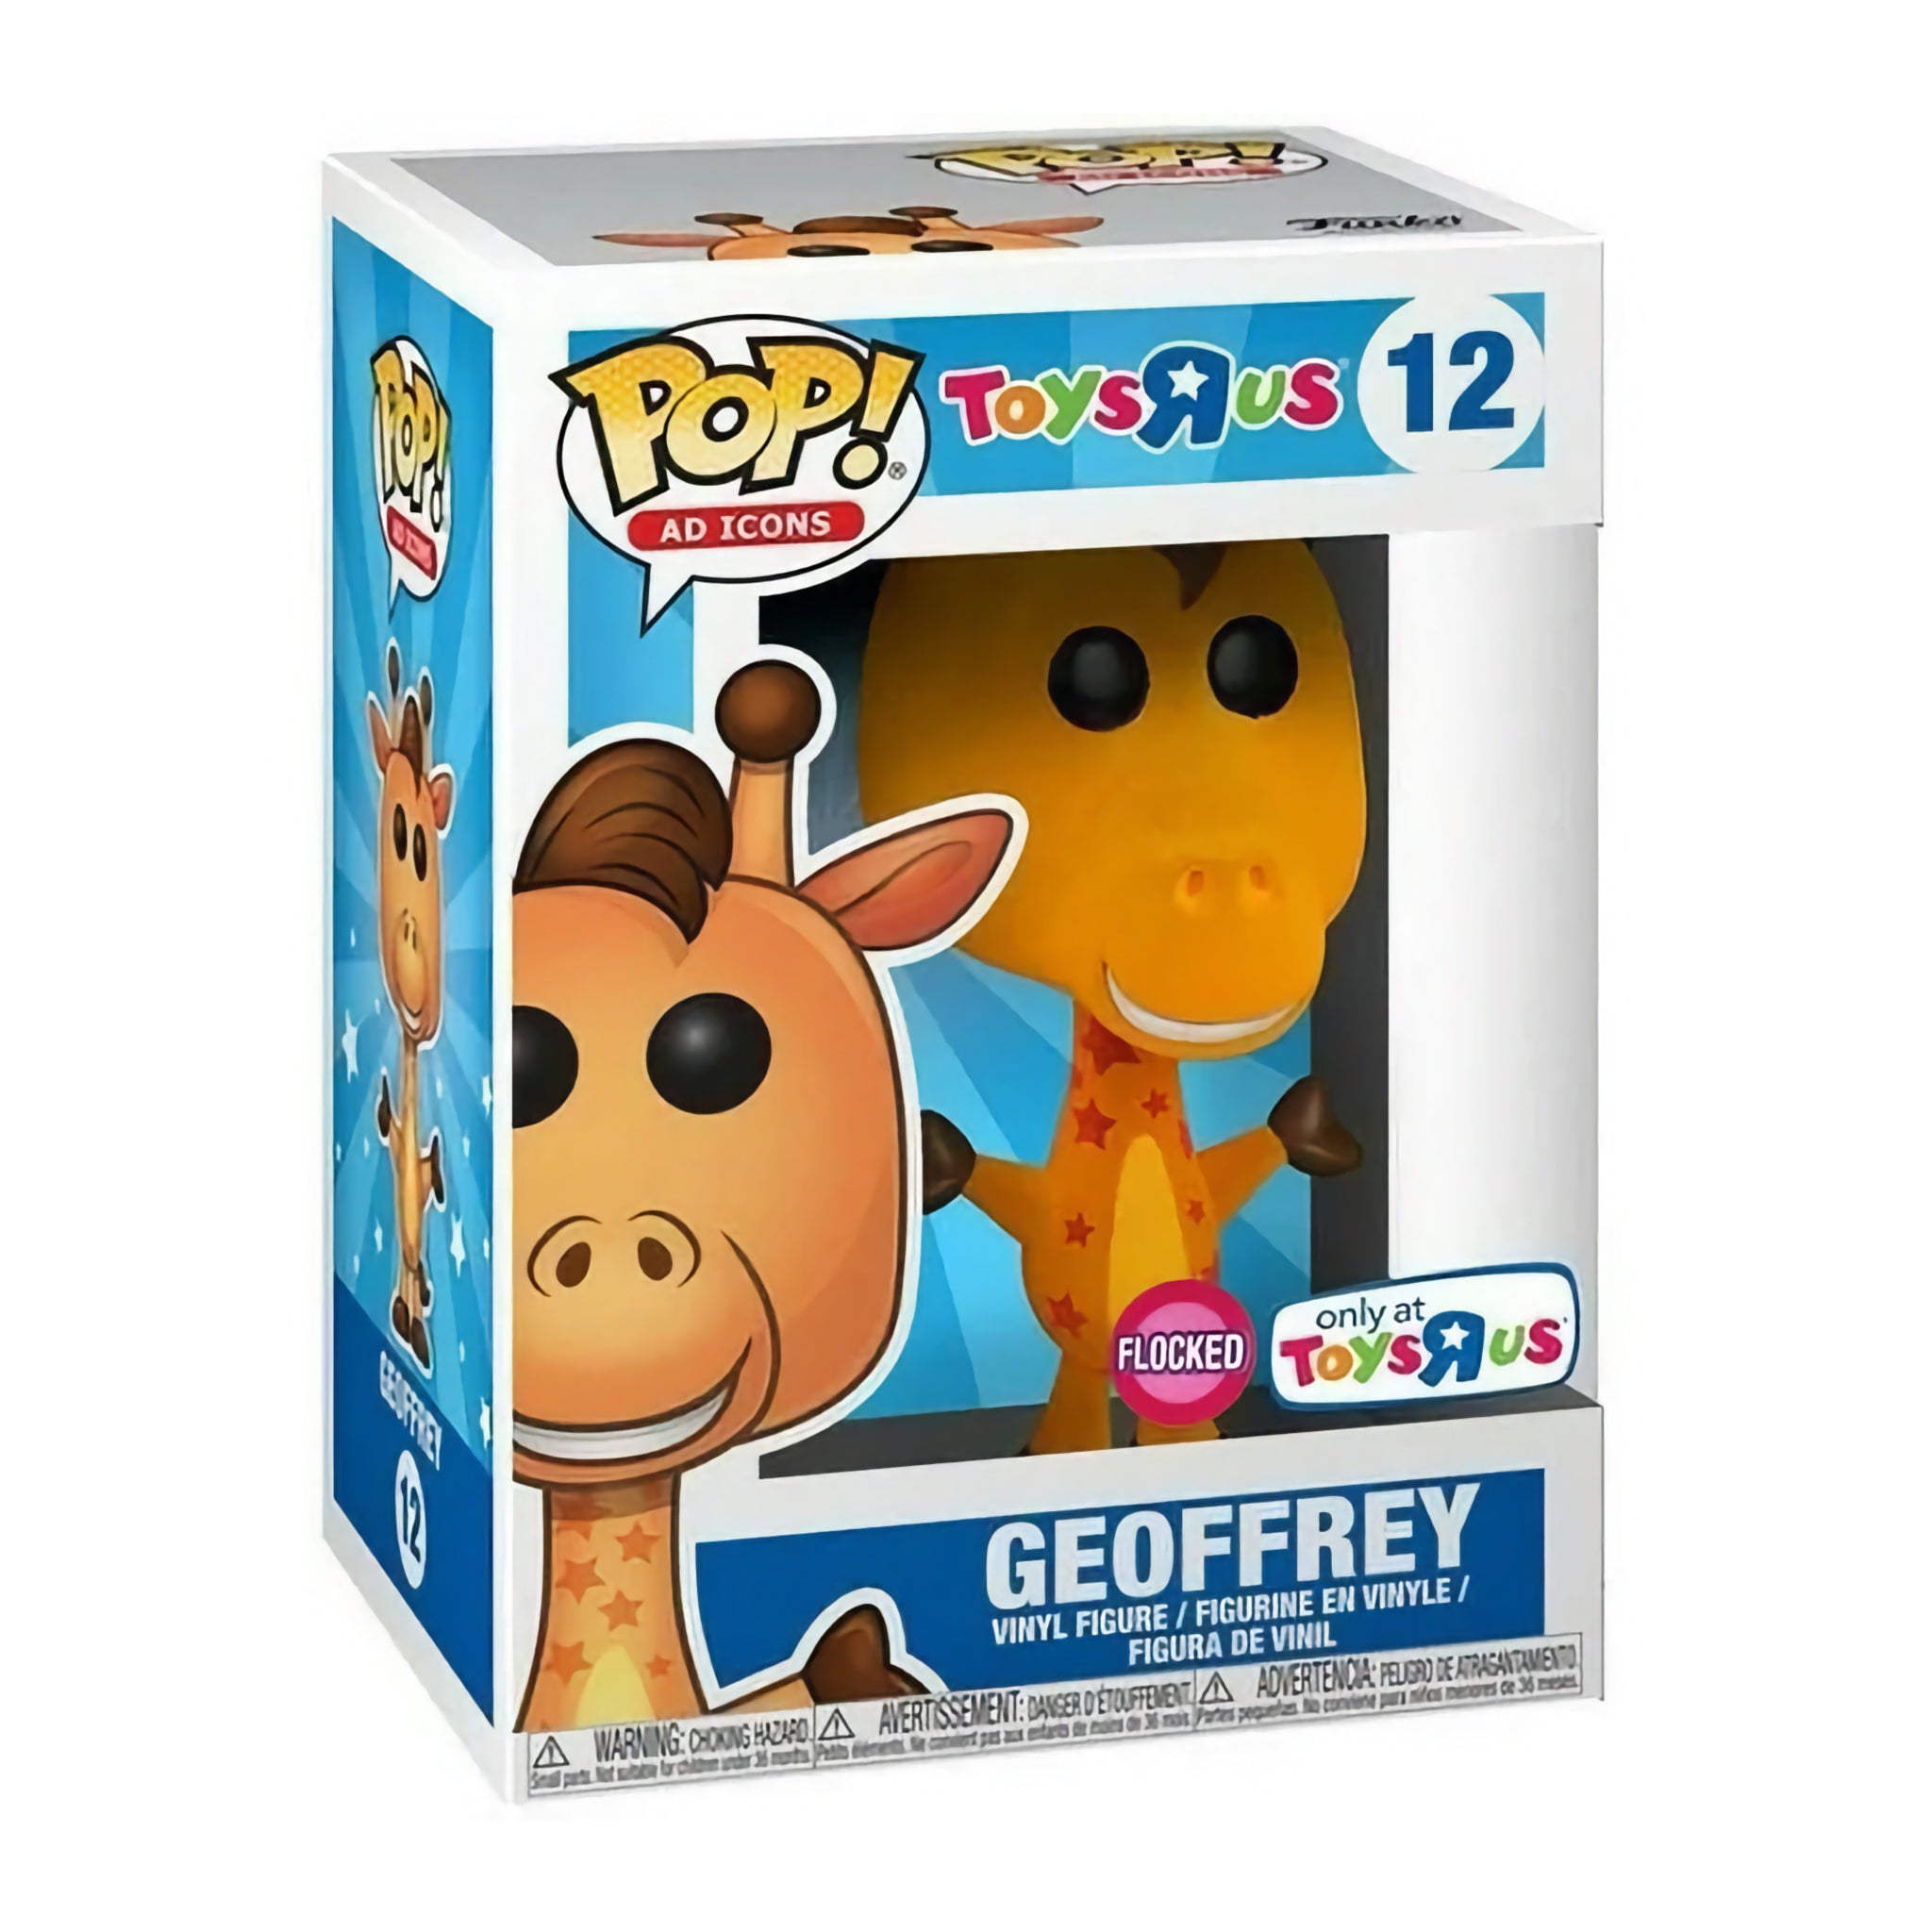 Geoffrey (Flocked) FLOCKED Funko Pop! TOYS R US EXCLUSIVE